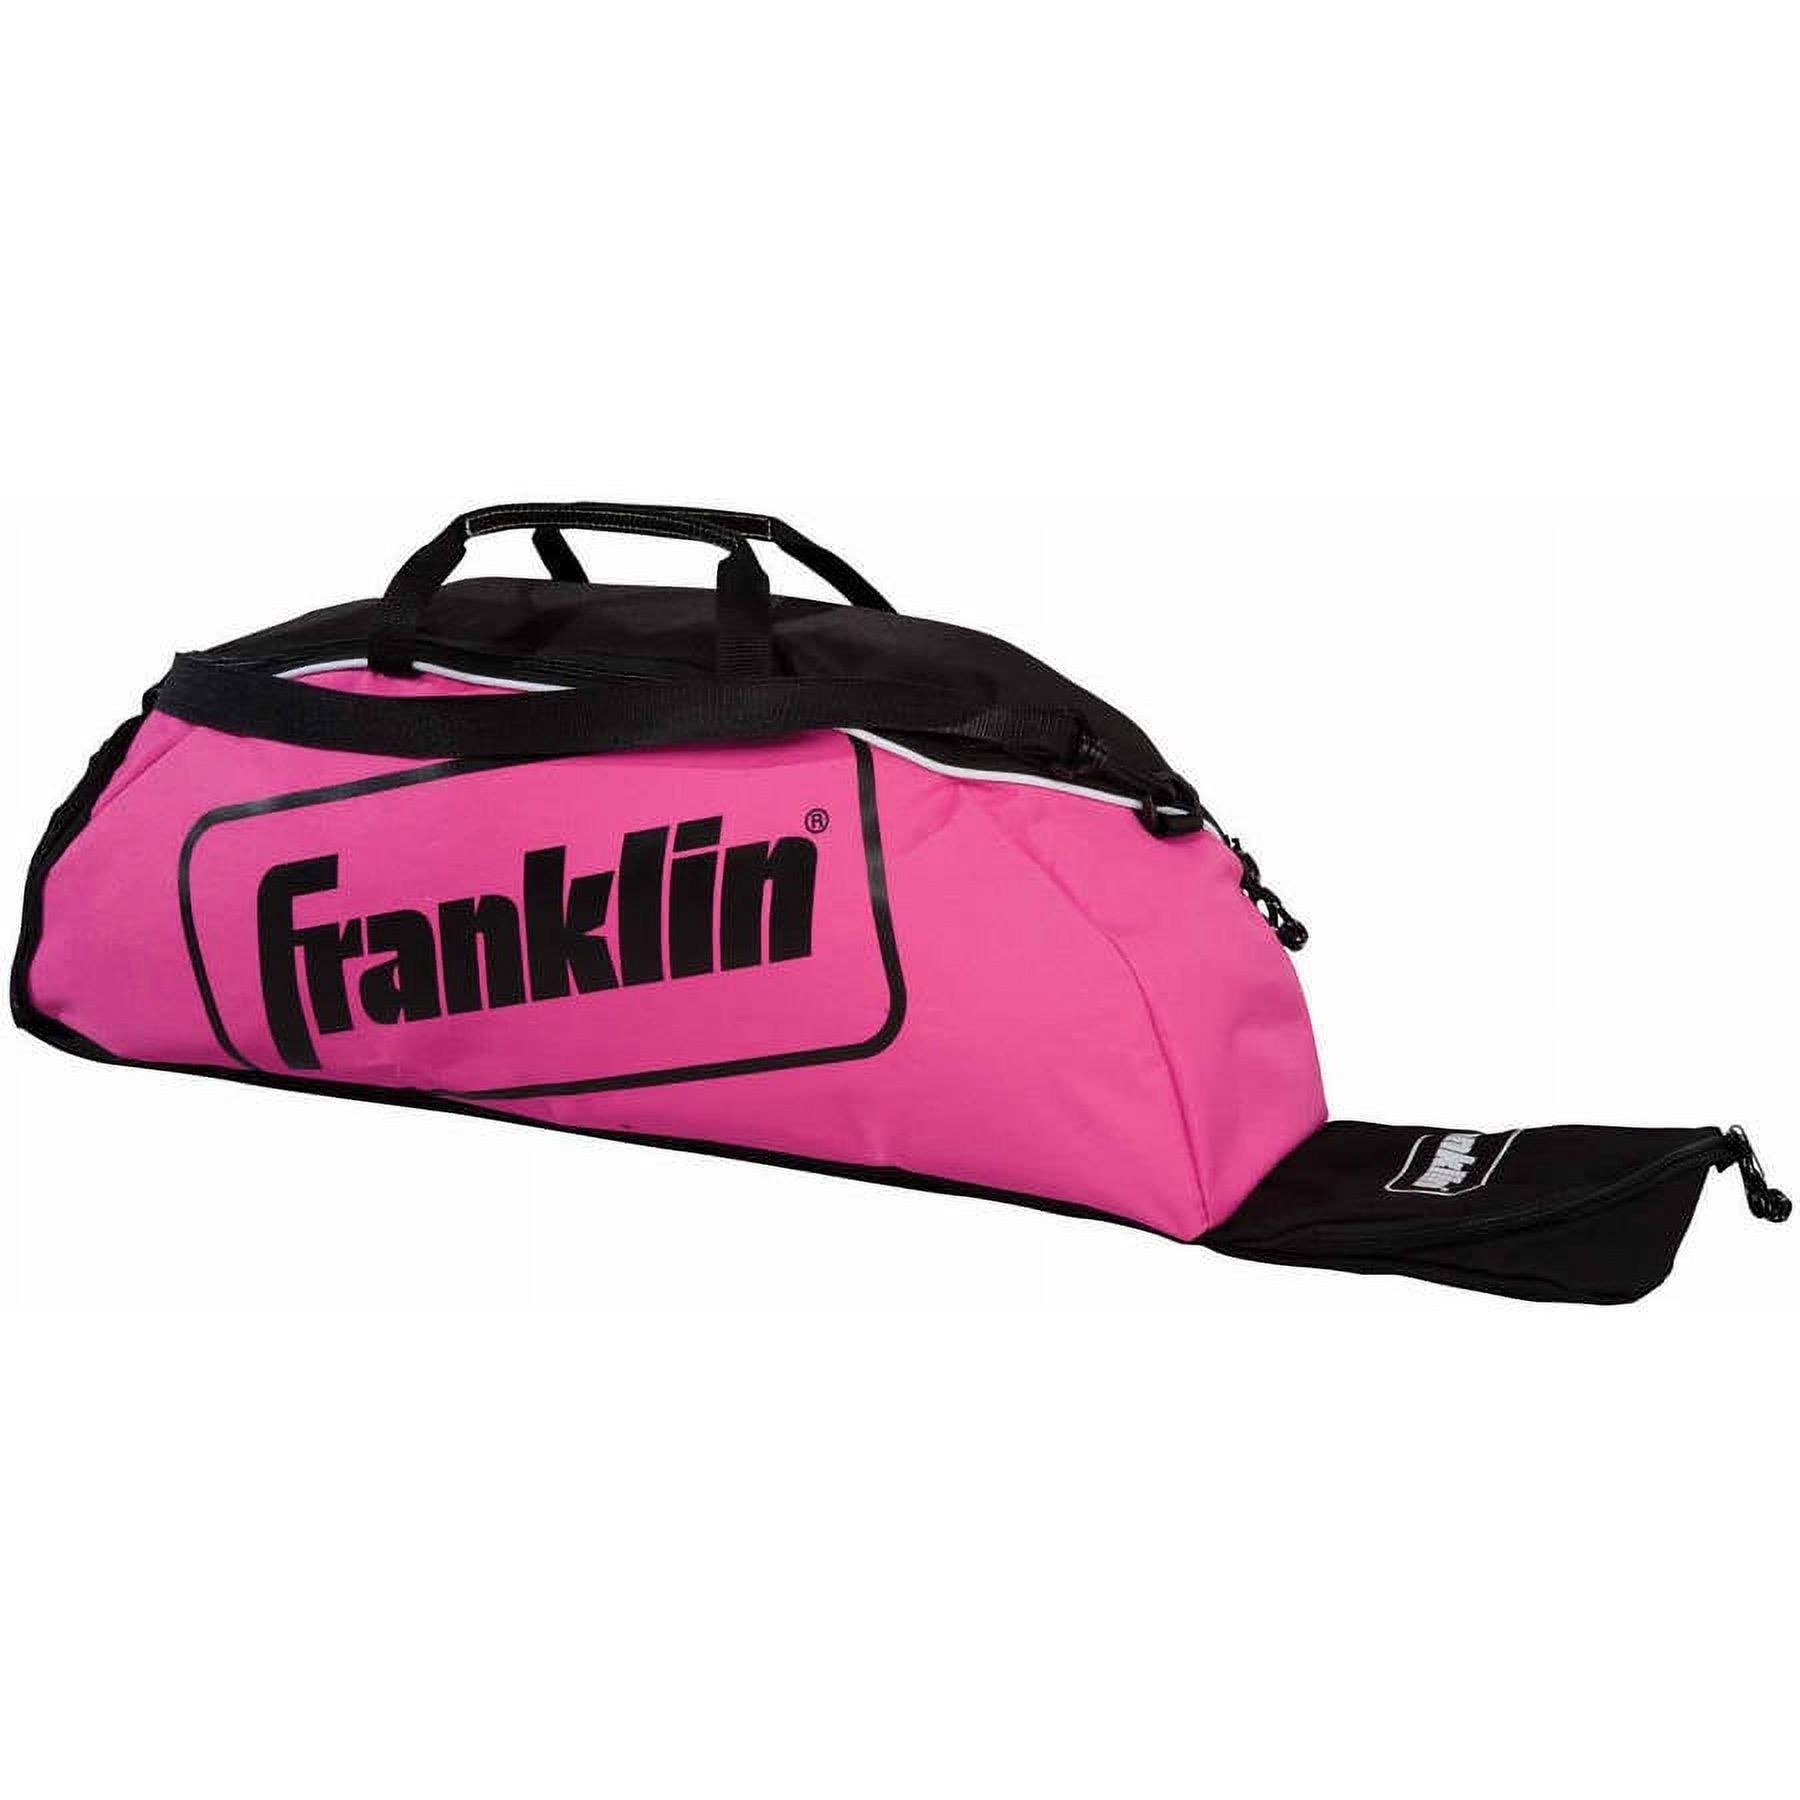 Franklin Sports Youth Baseball + Teeball Bag - Kids Bat Bag - Pink - image 1 of 2